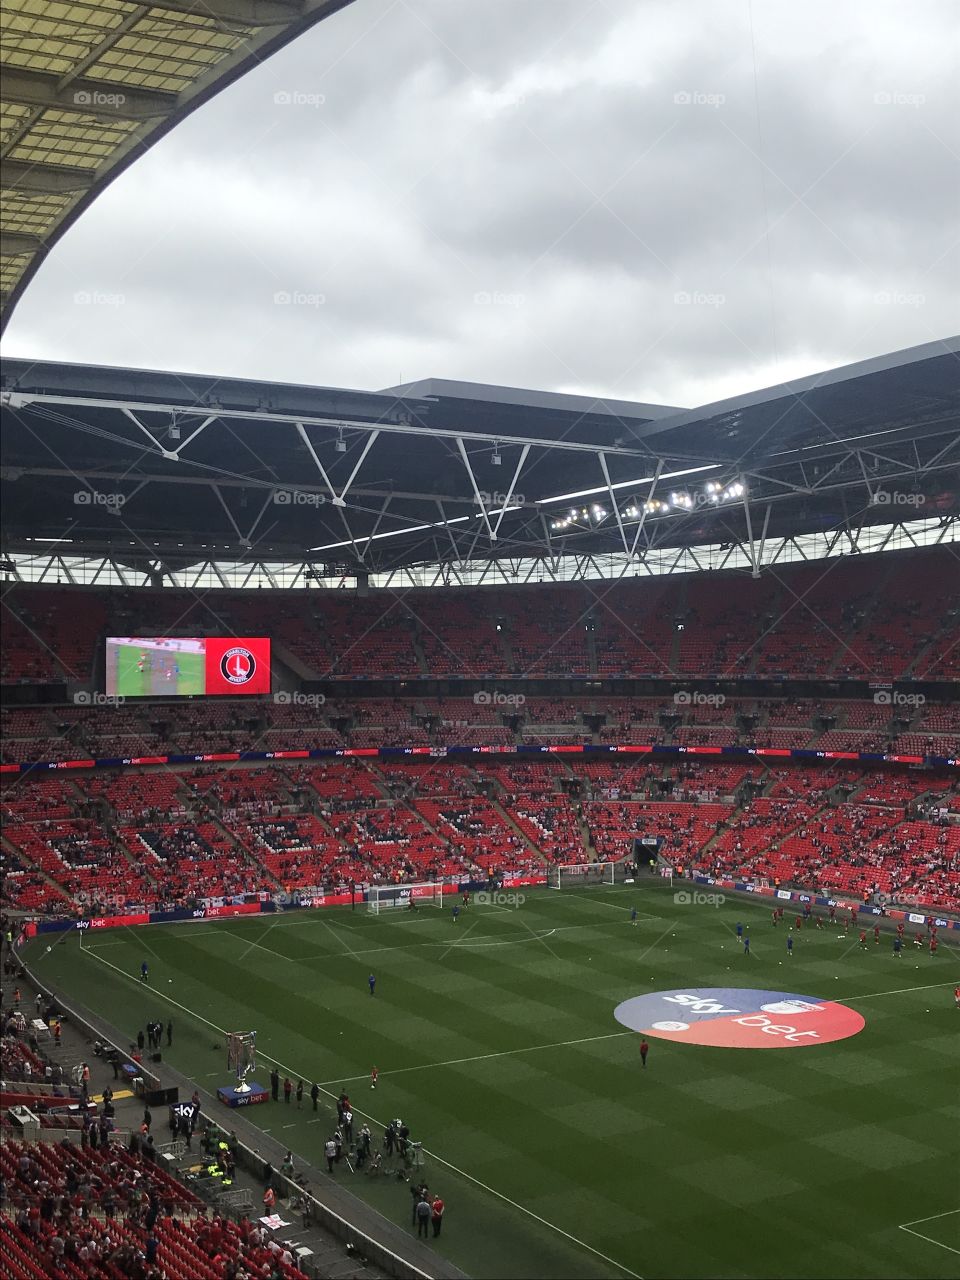 Wembley league 1 Play Off Final 2019